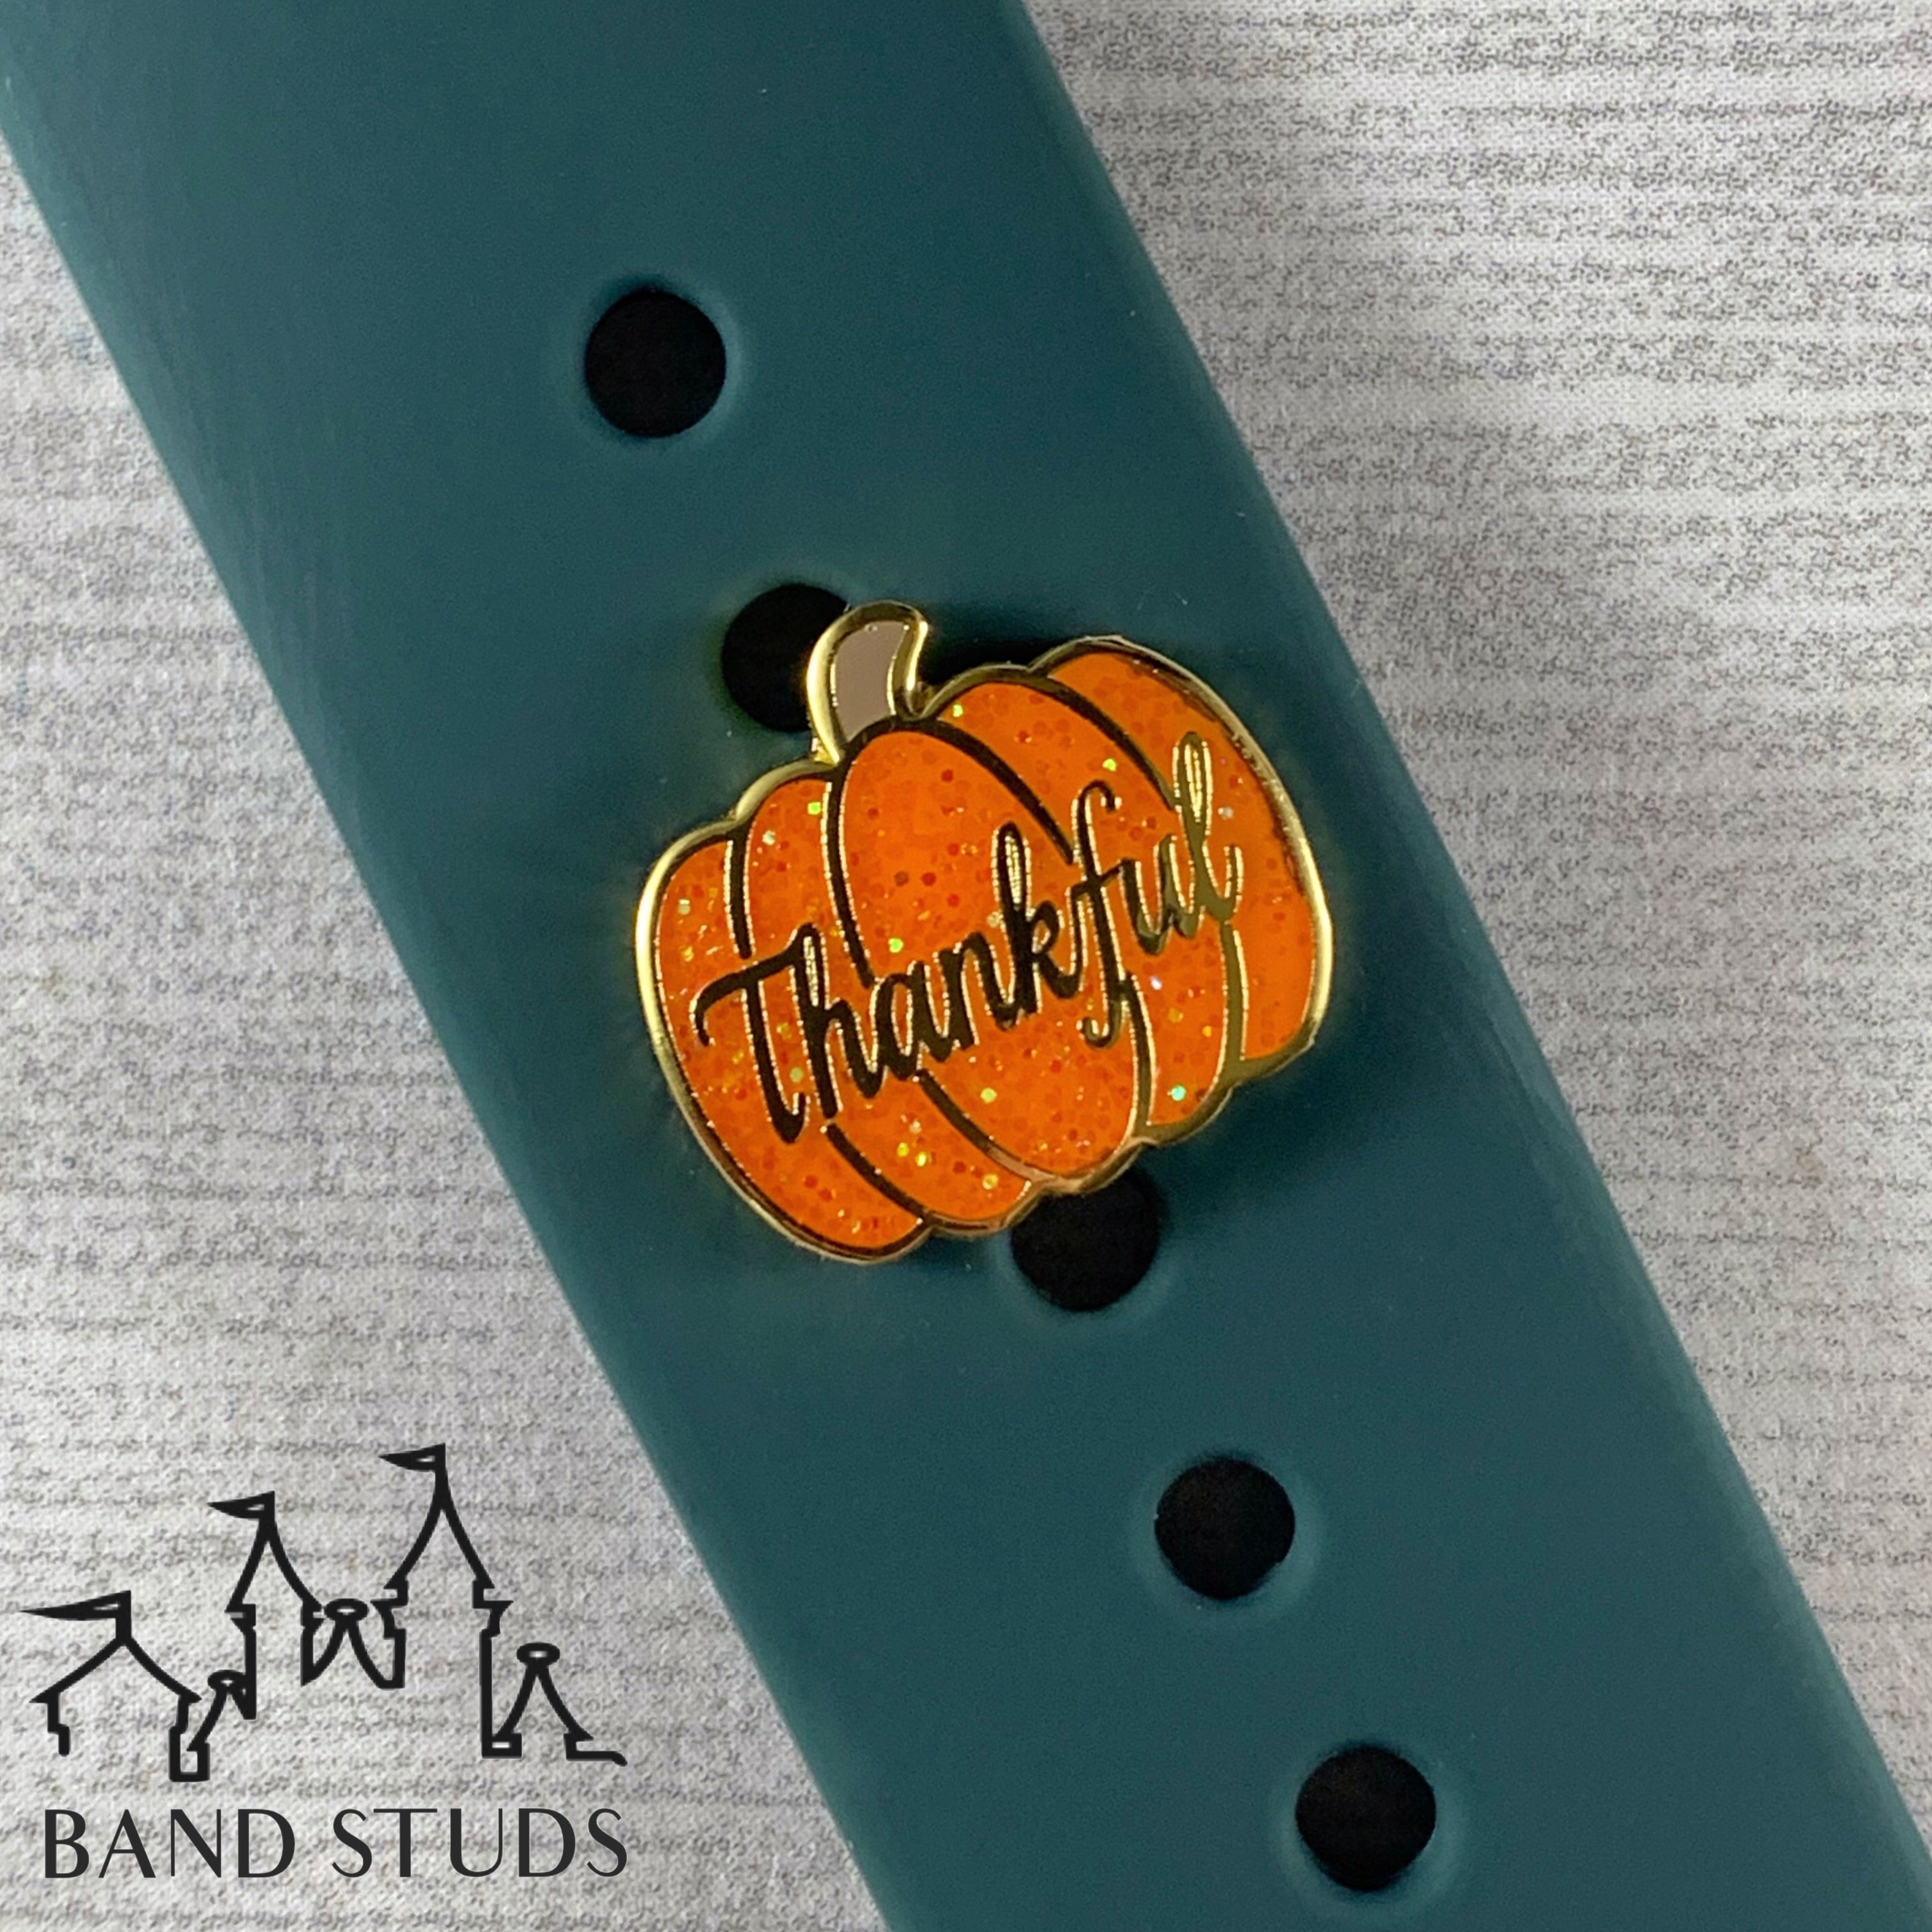 Band Stud® - Fall Collection - Thankful